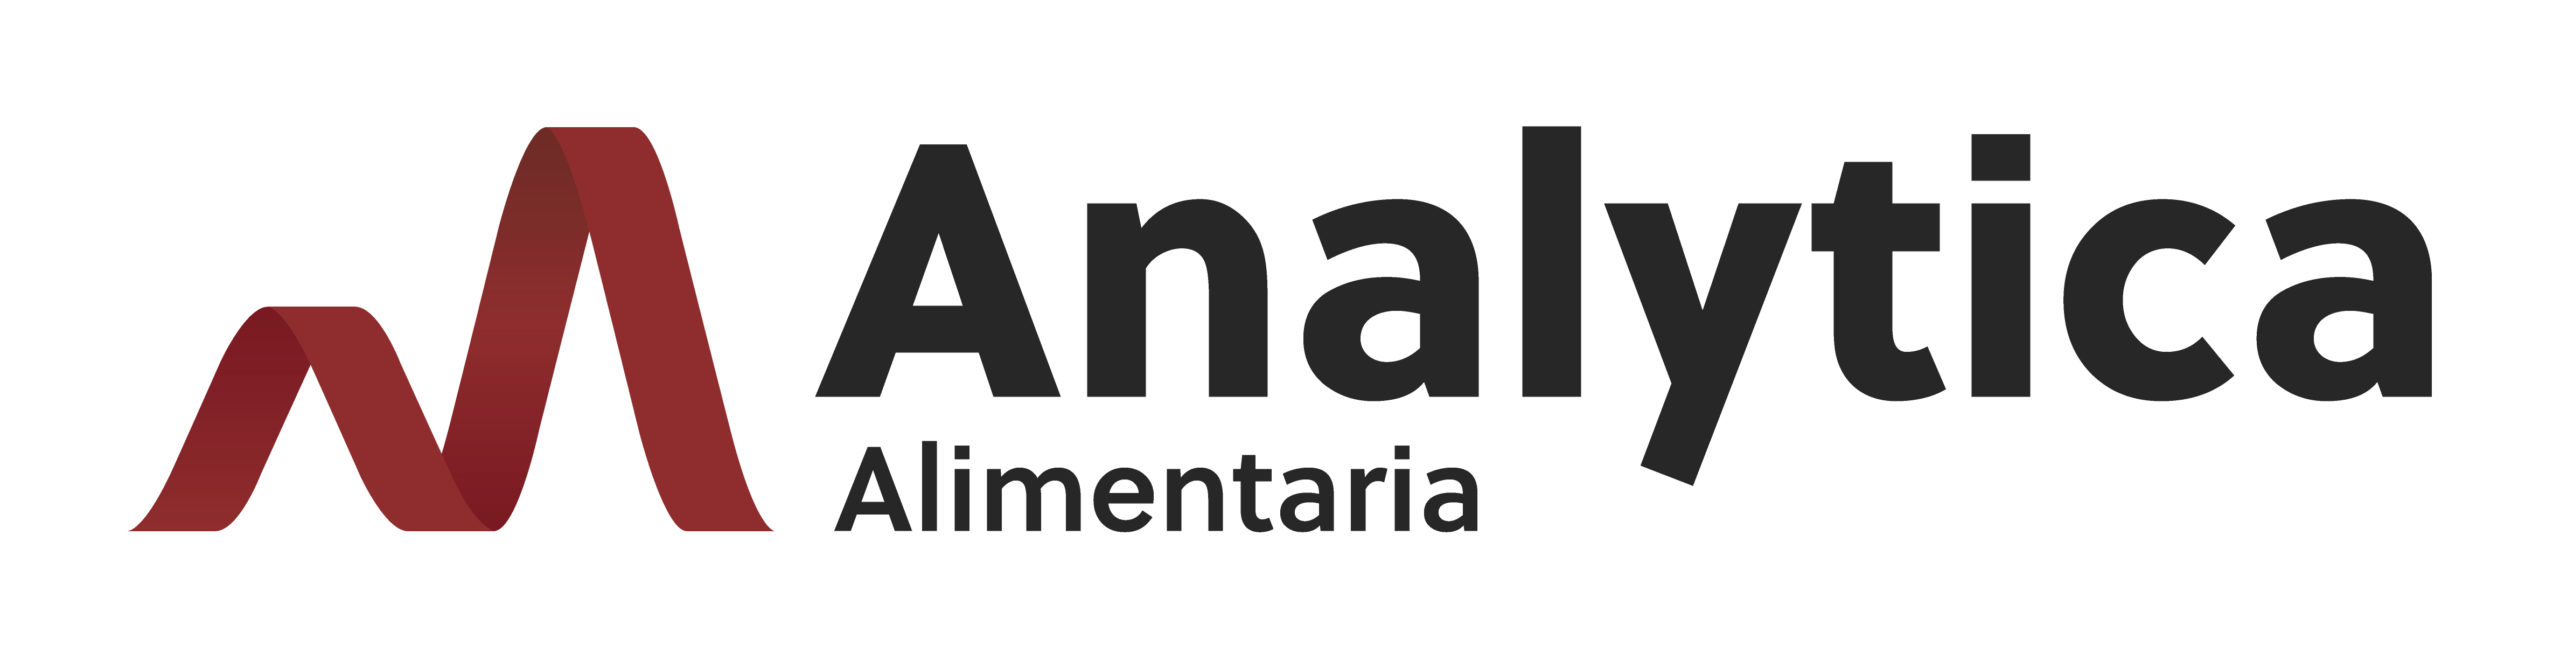 Logo Analytica Alimentaria - Landscape - White Background